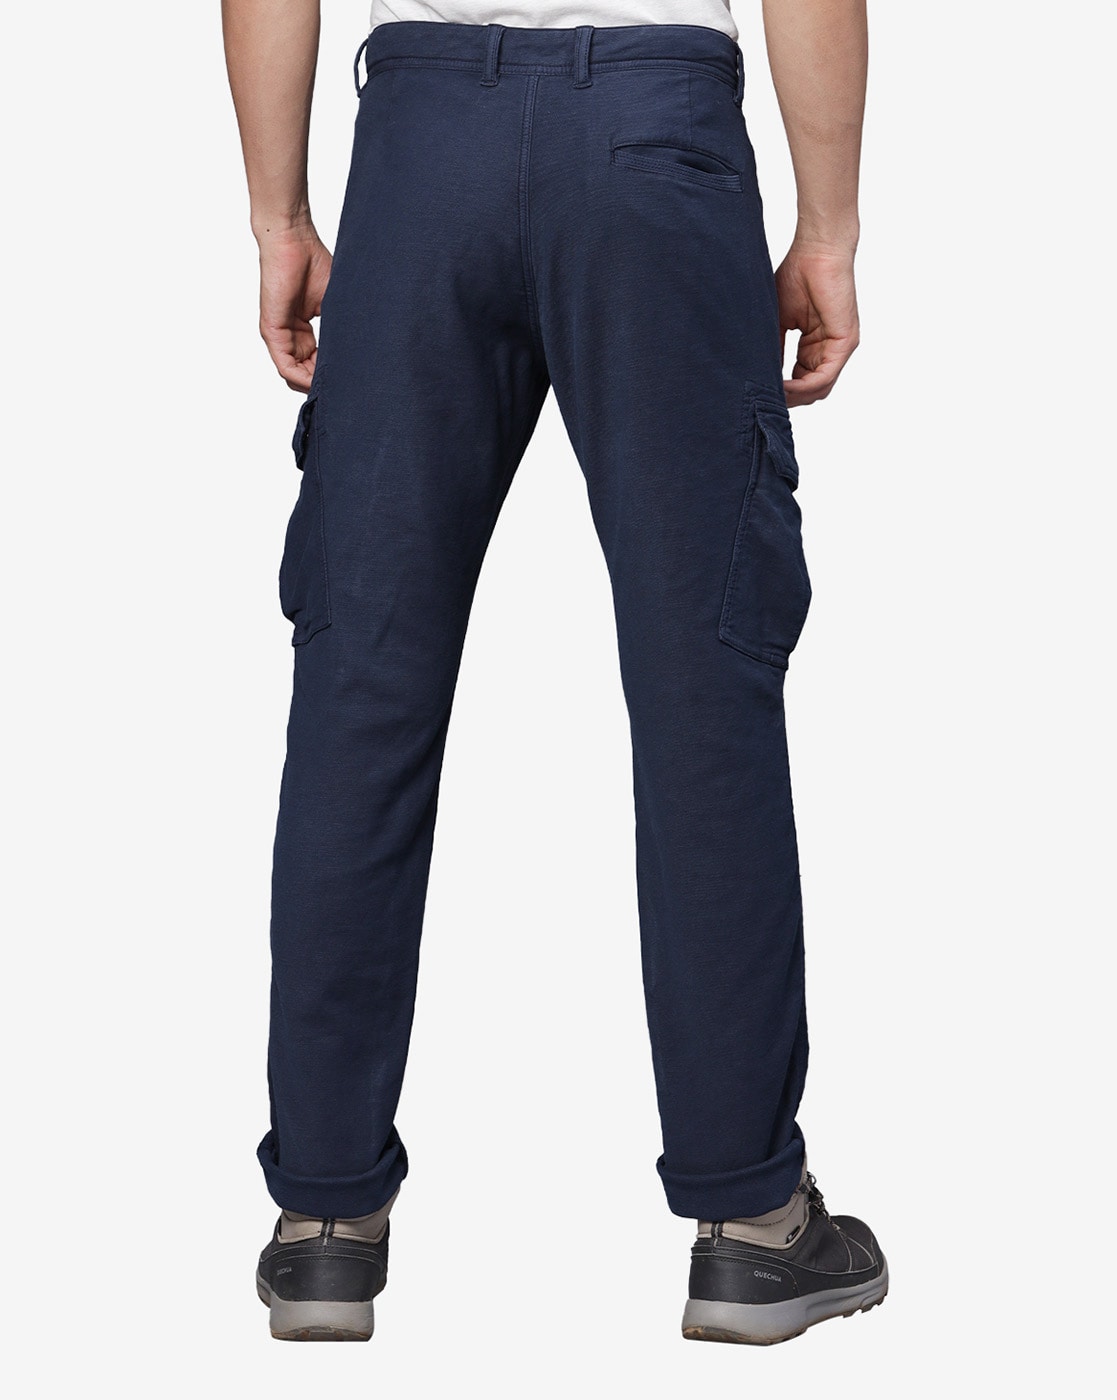 The Diego Pants | Men's Chino Pants – Mod Ref | Common Market